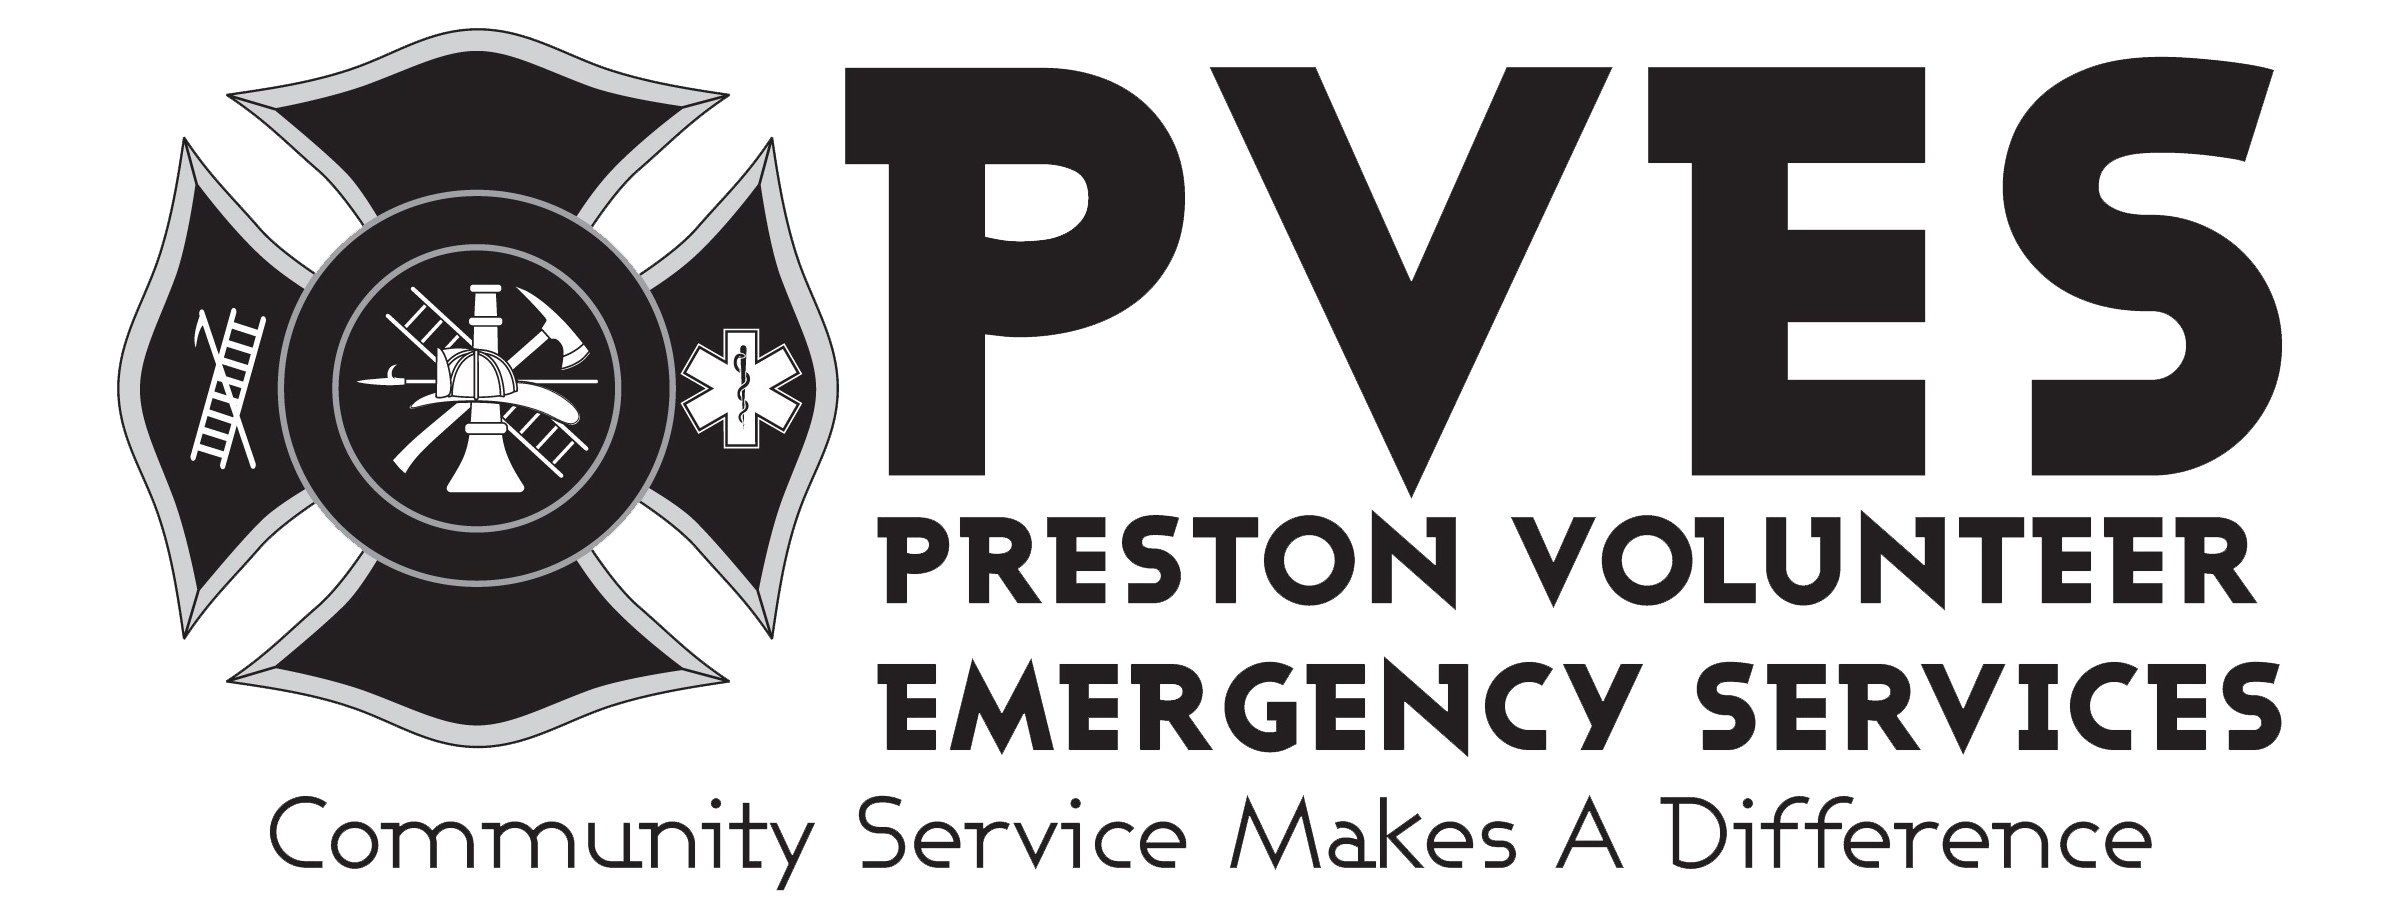 Preston Volunteer Emergency Services